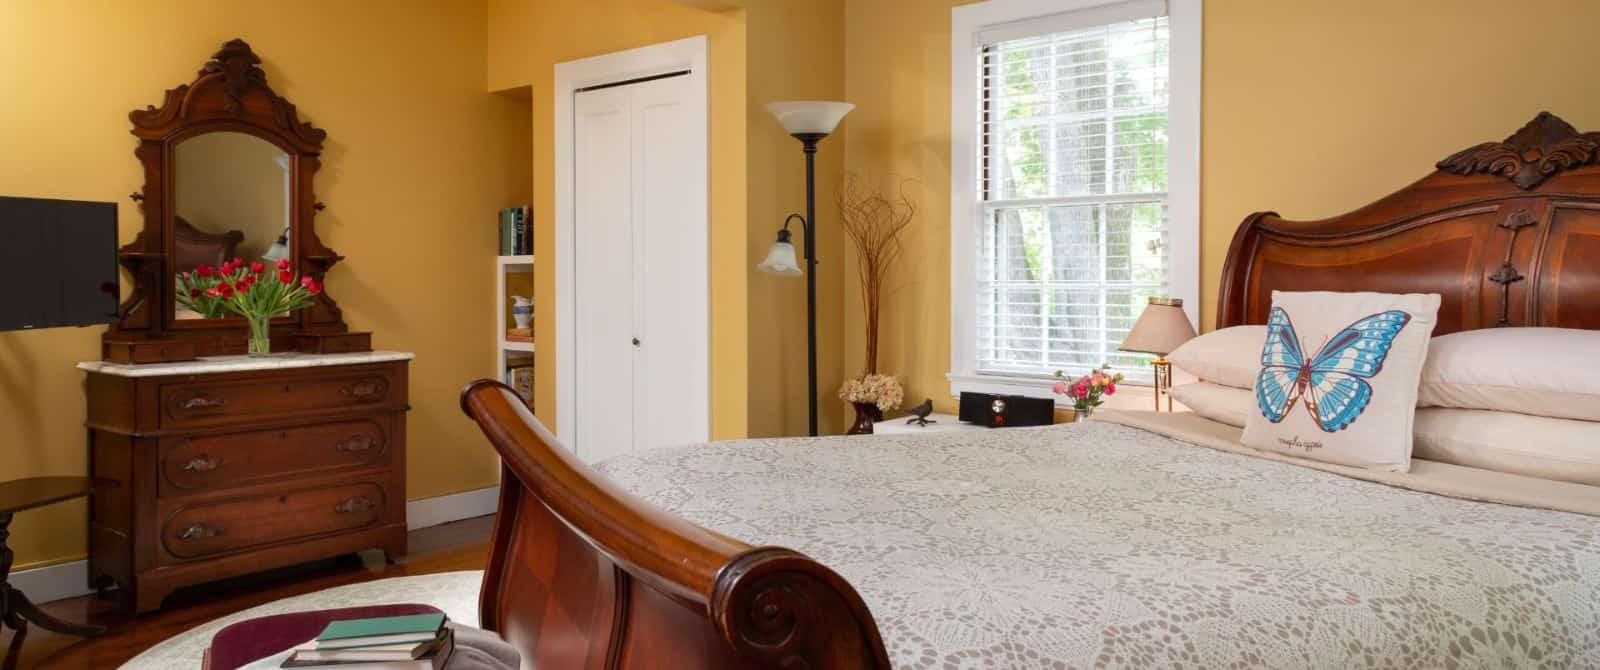 Bedroom with yellow walls, white trim, hardwood flooring, wooden sleigh bed, wooden dresser, and window